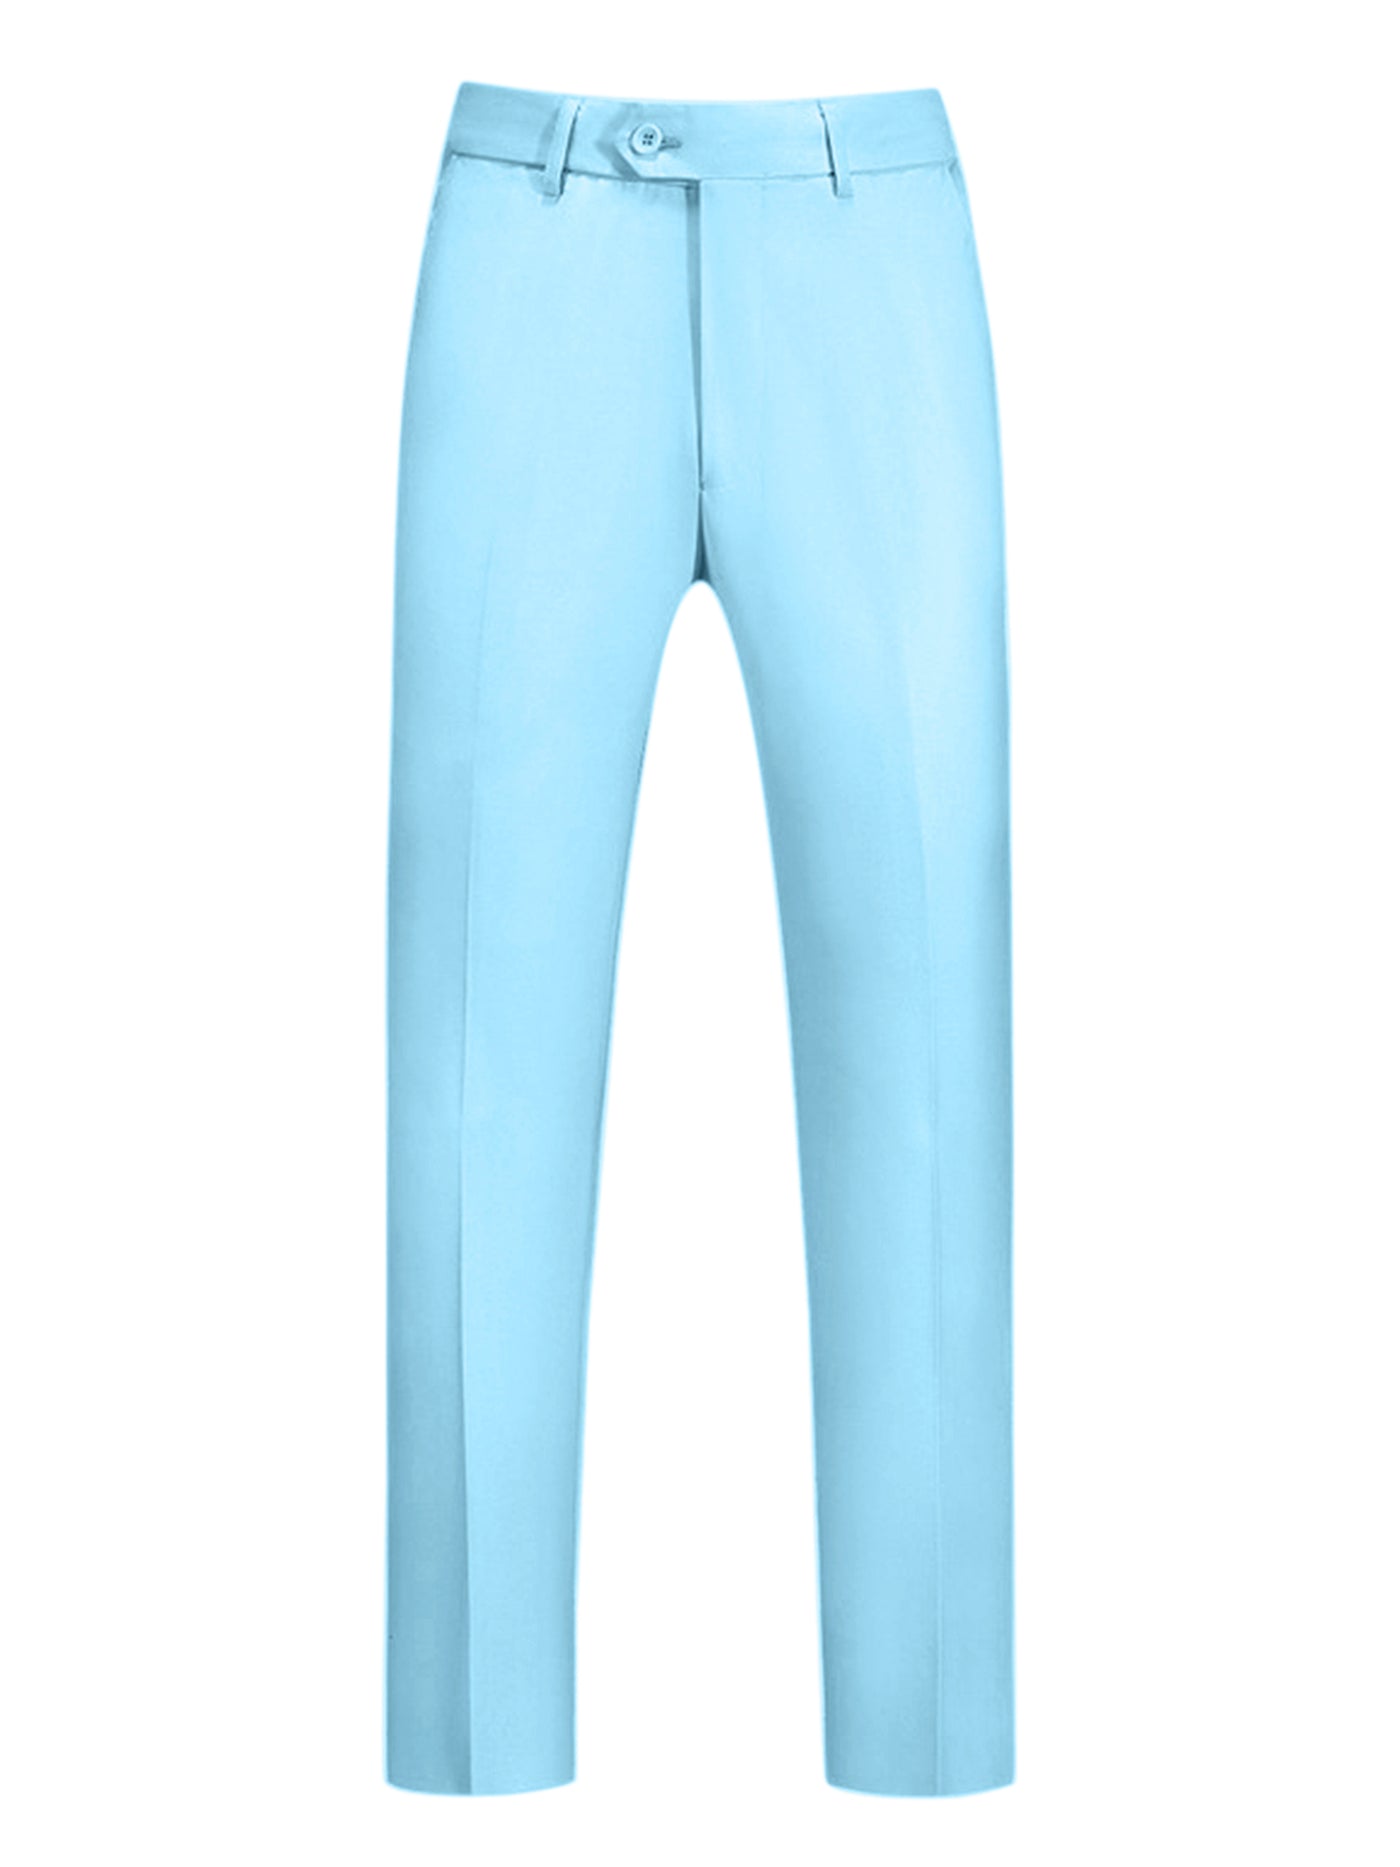 Bublédon Solid Dress Pants for Men's Business Button Closure Flat Front Formal Trousers